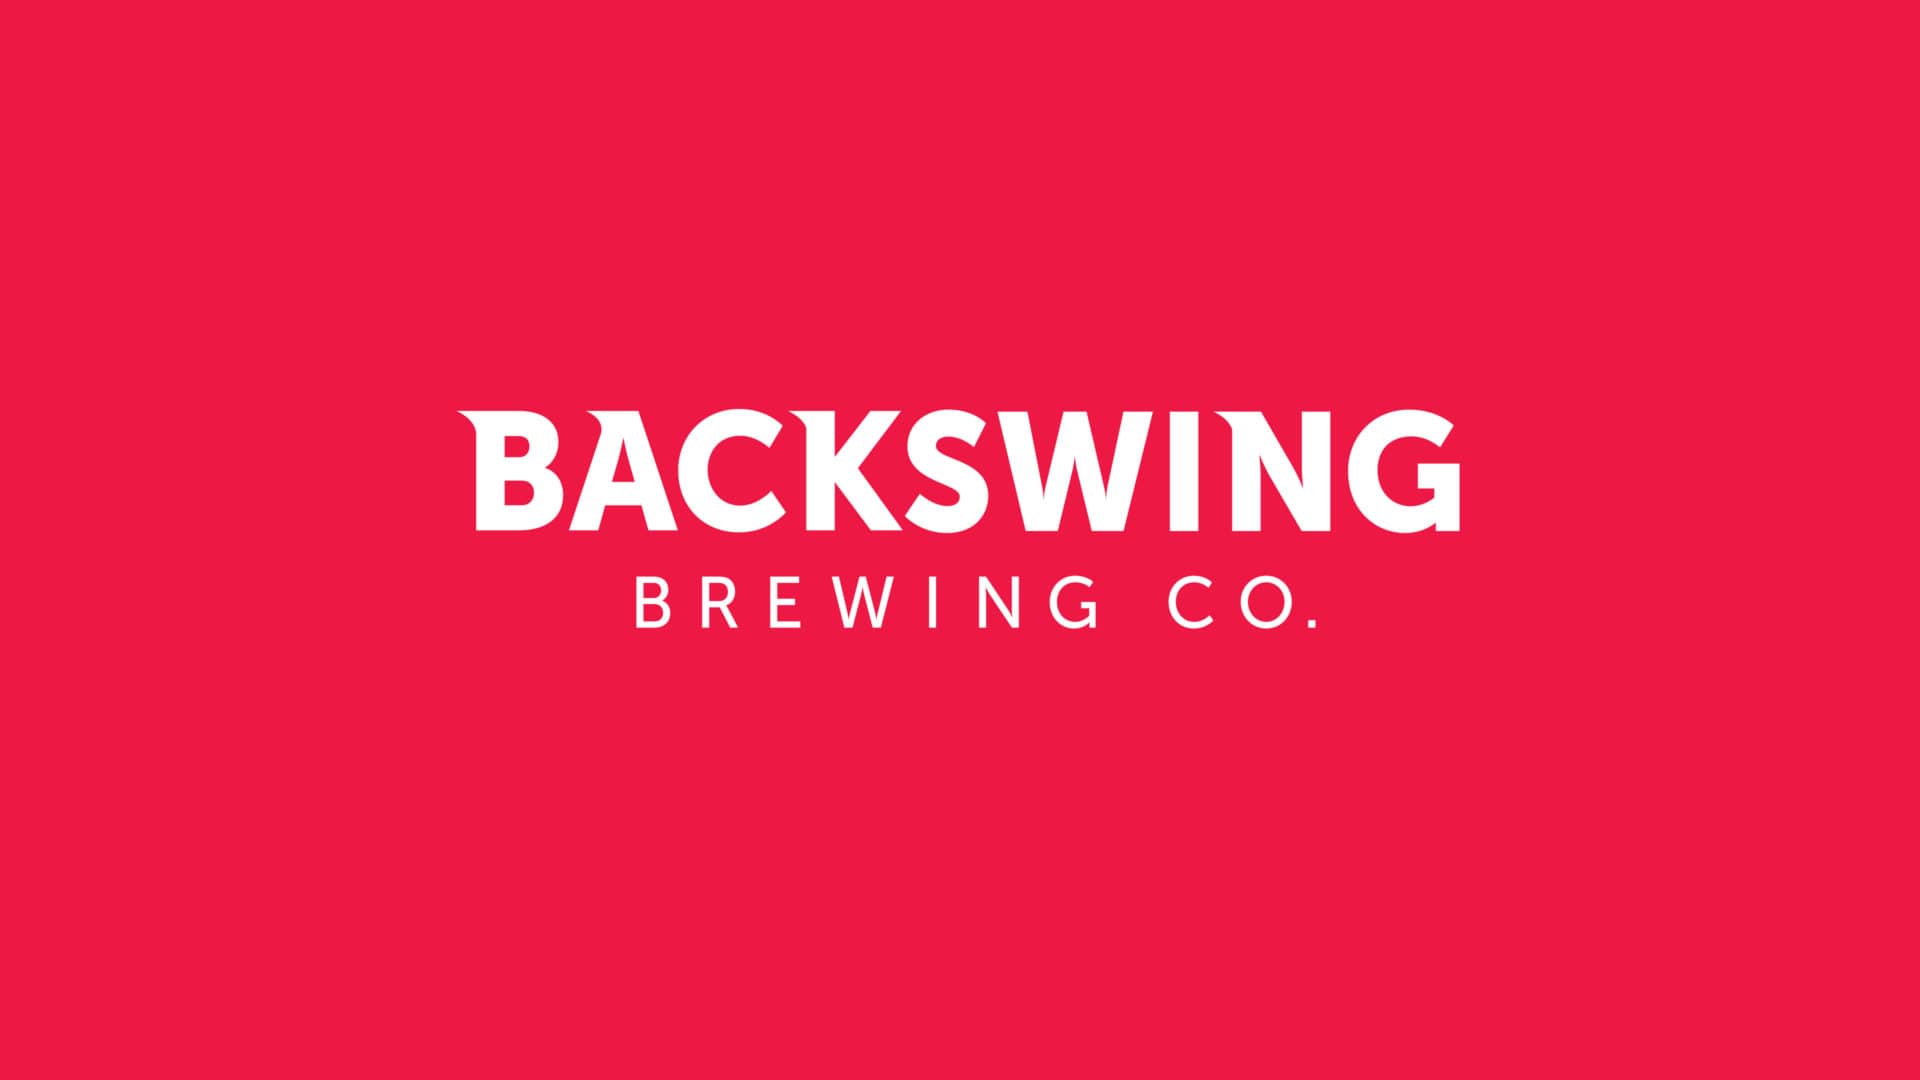 Backswing Brewing branding: logo on red background